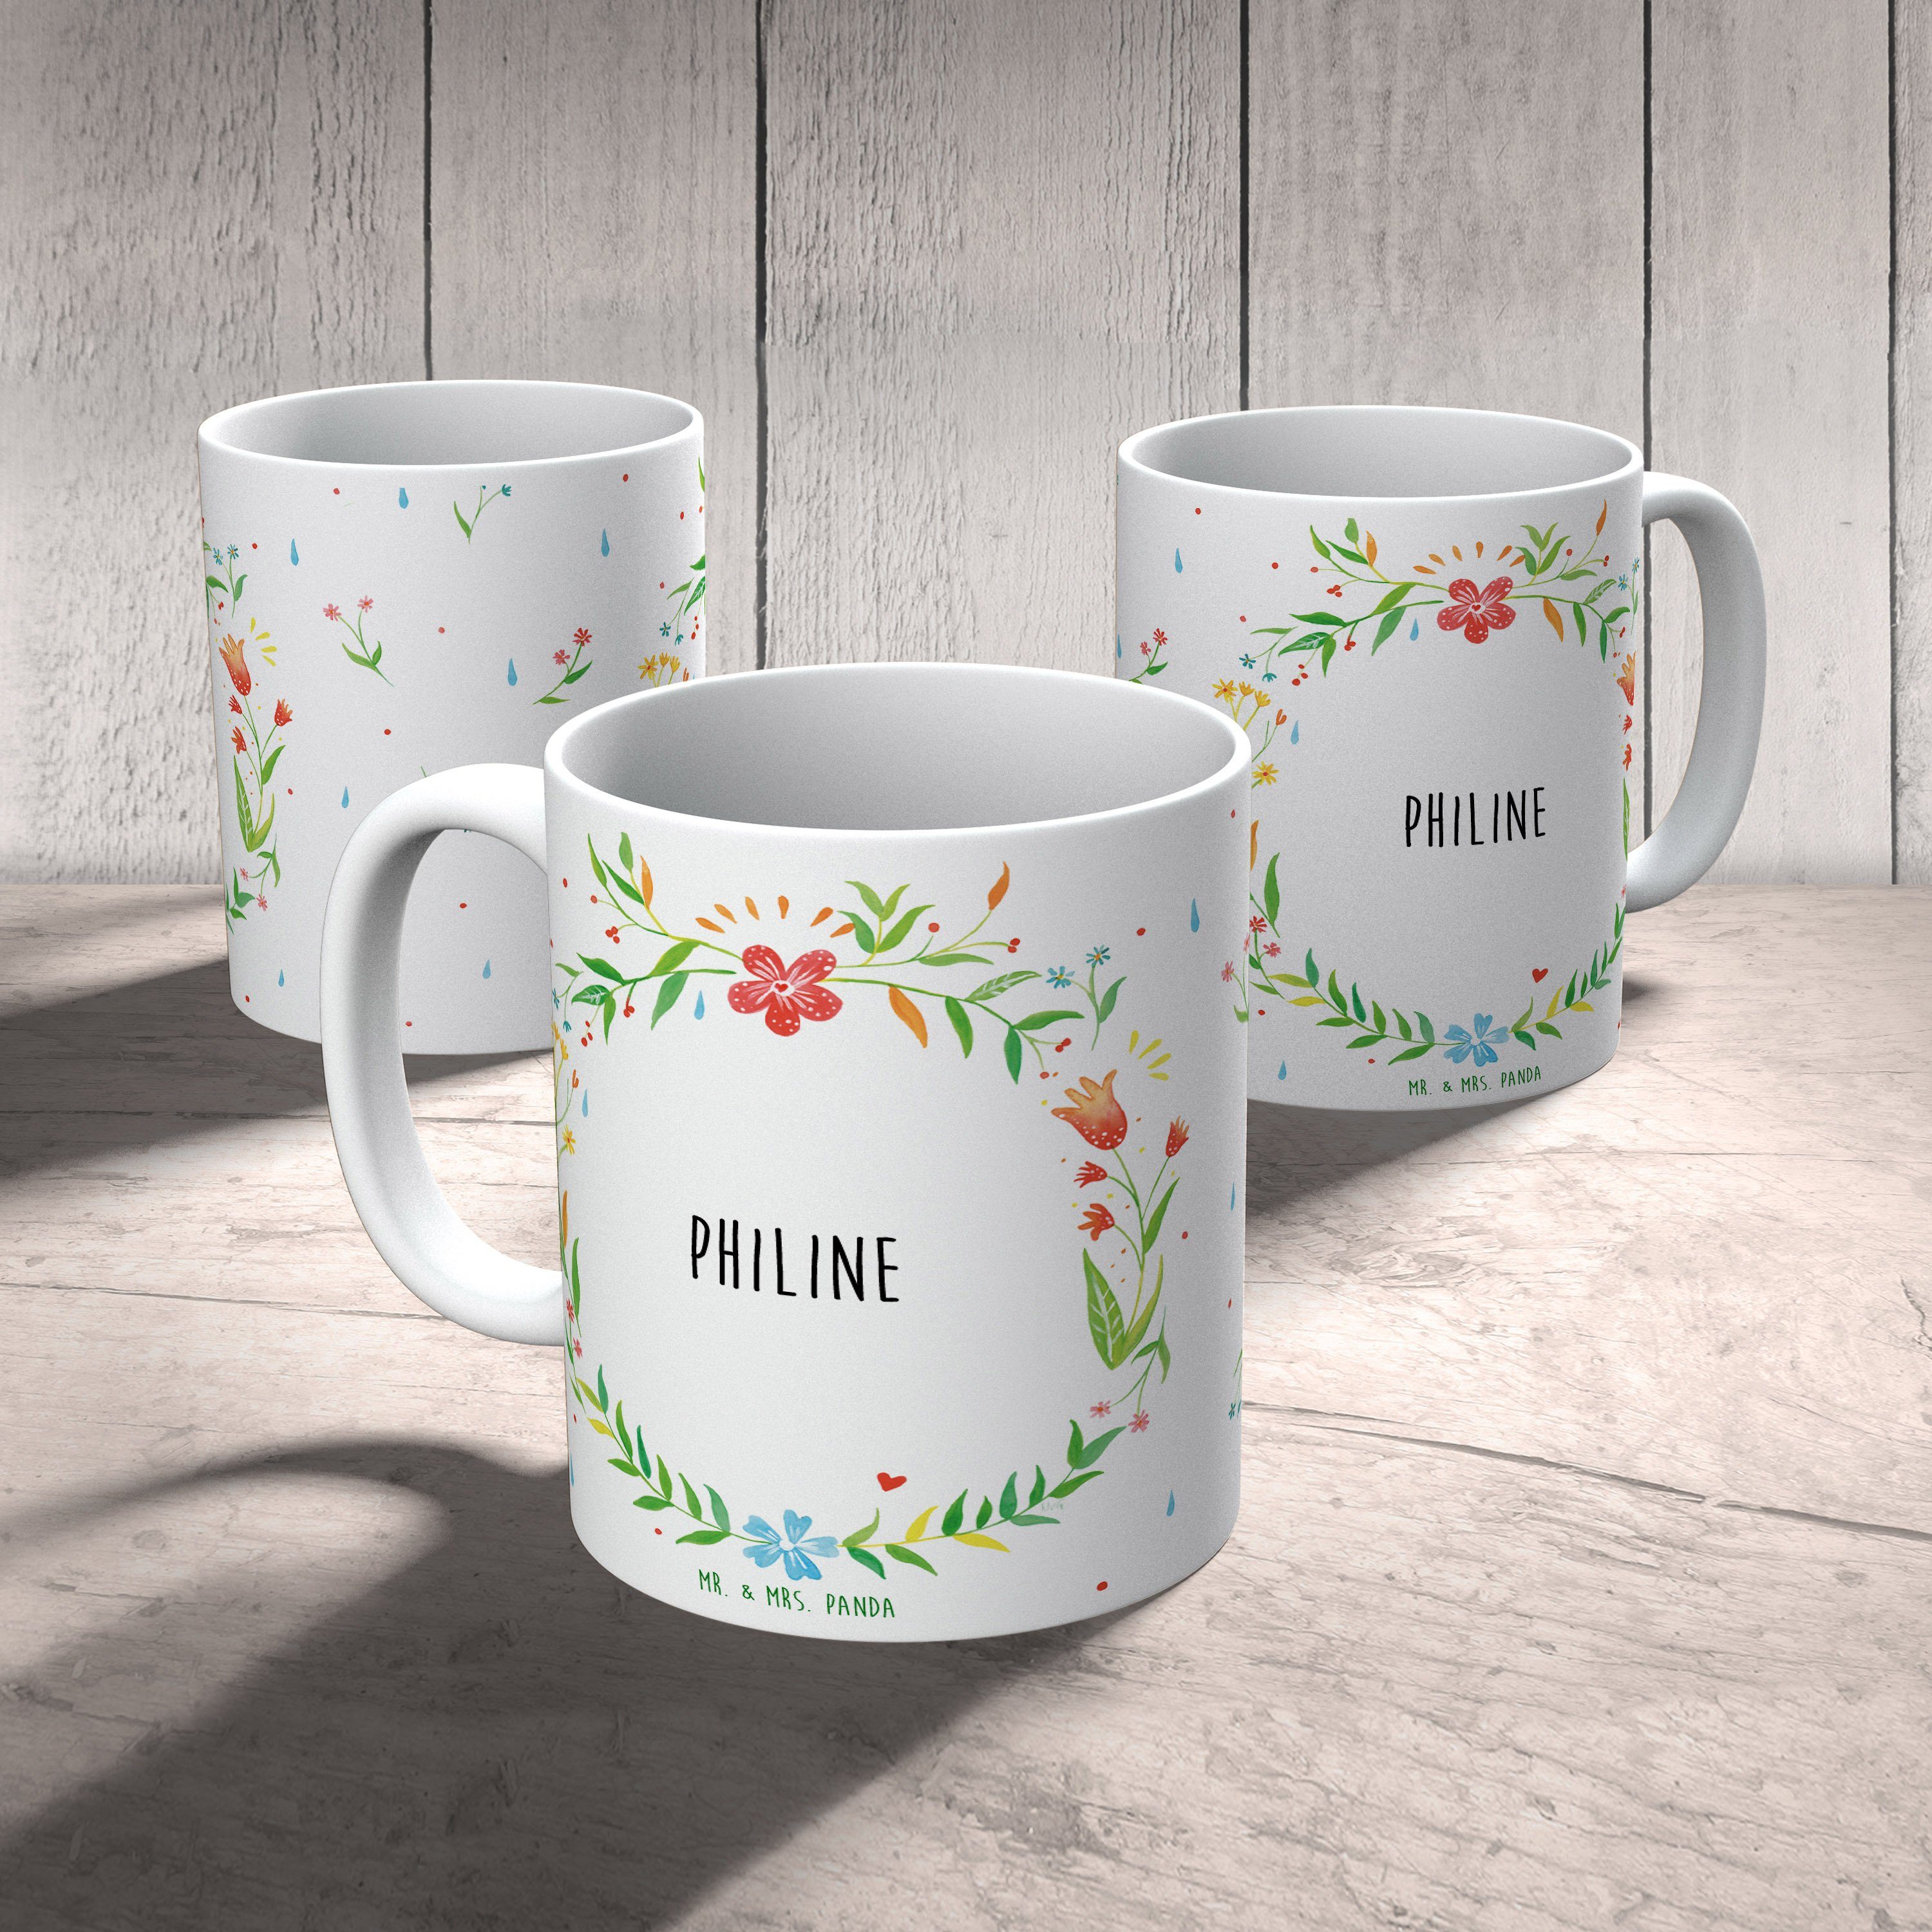 Mr. & Mrs. Panda Tasse Tasse, Teet, Philine Porzellantasse, Keramik Geschenk Geschenk, - Kaffeetasse